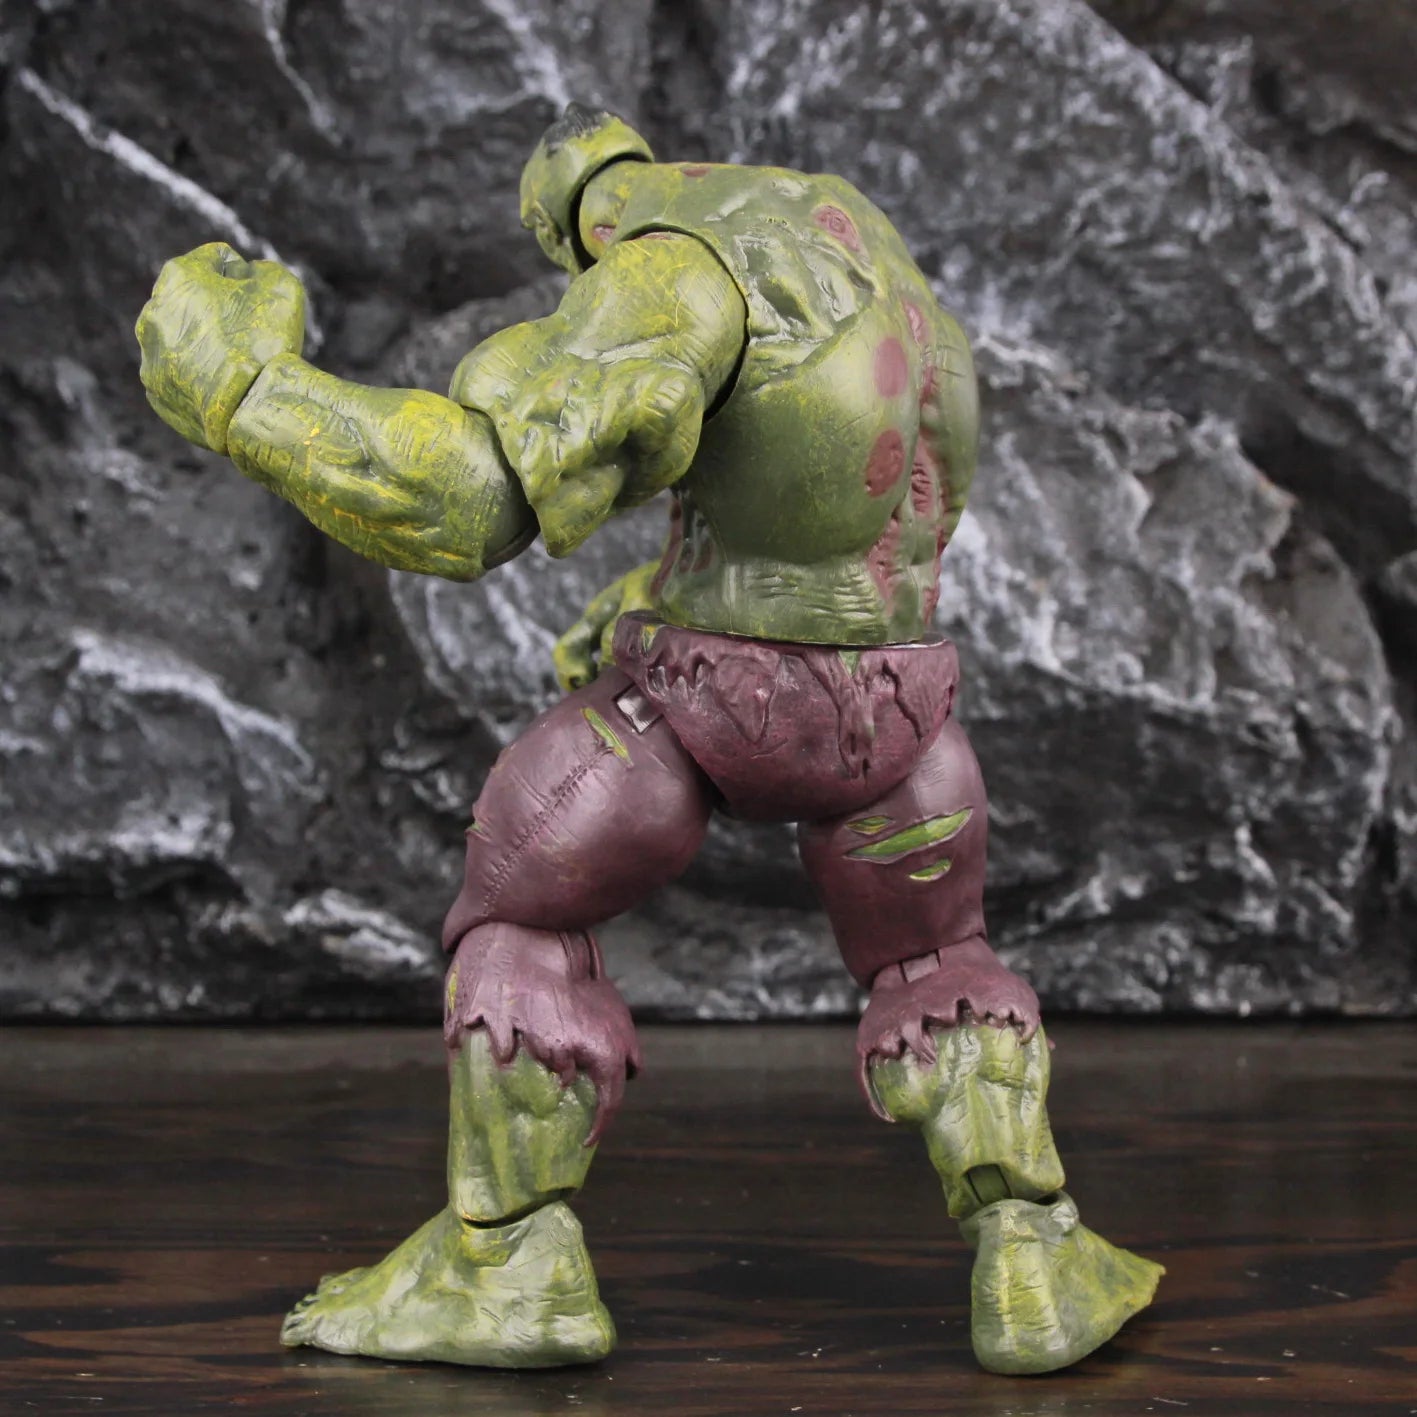 Remastered Zombie Marvel Superheroes Action Figure Set - Hulk, Captain America, Spider-Man